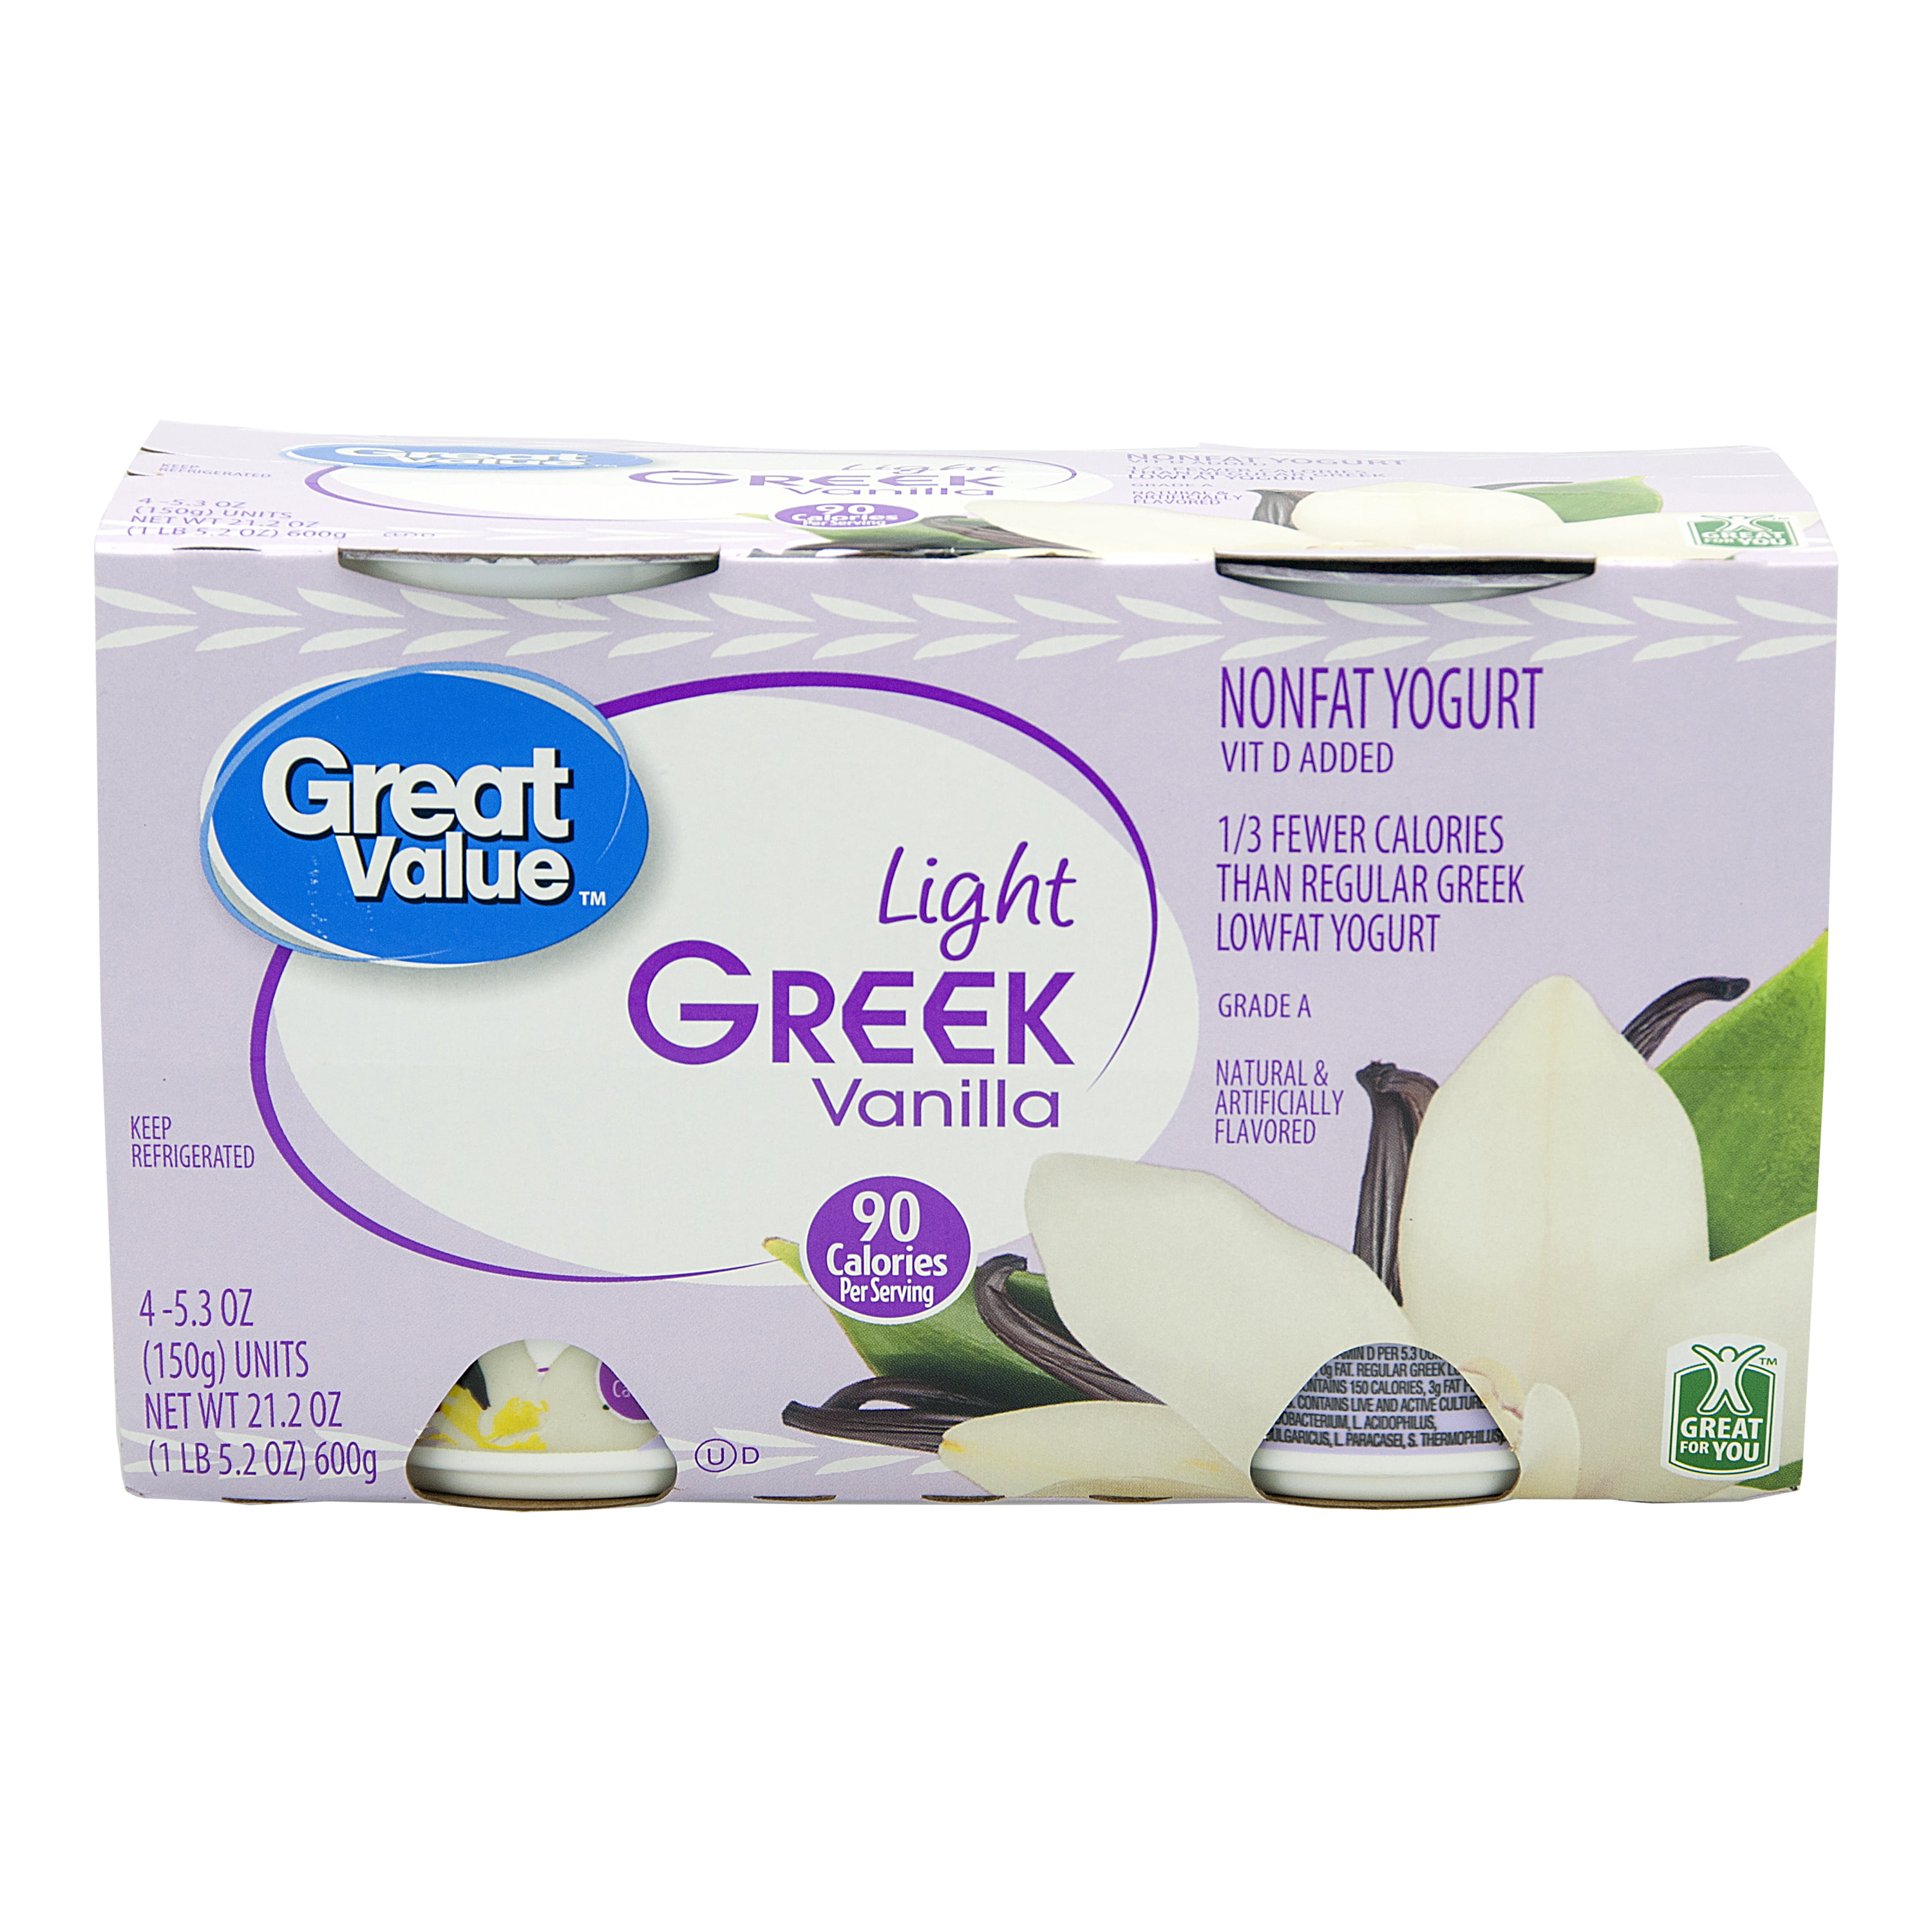 Great Value Light Greek Nonfat Yogurt Nutrition Facts ...